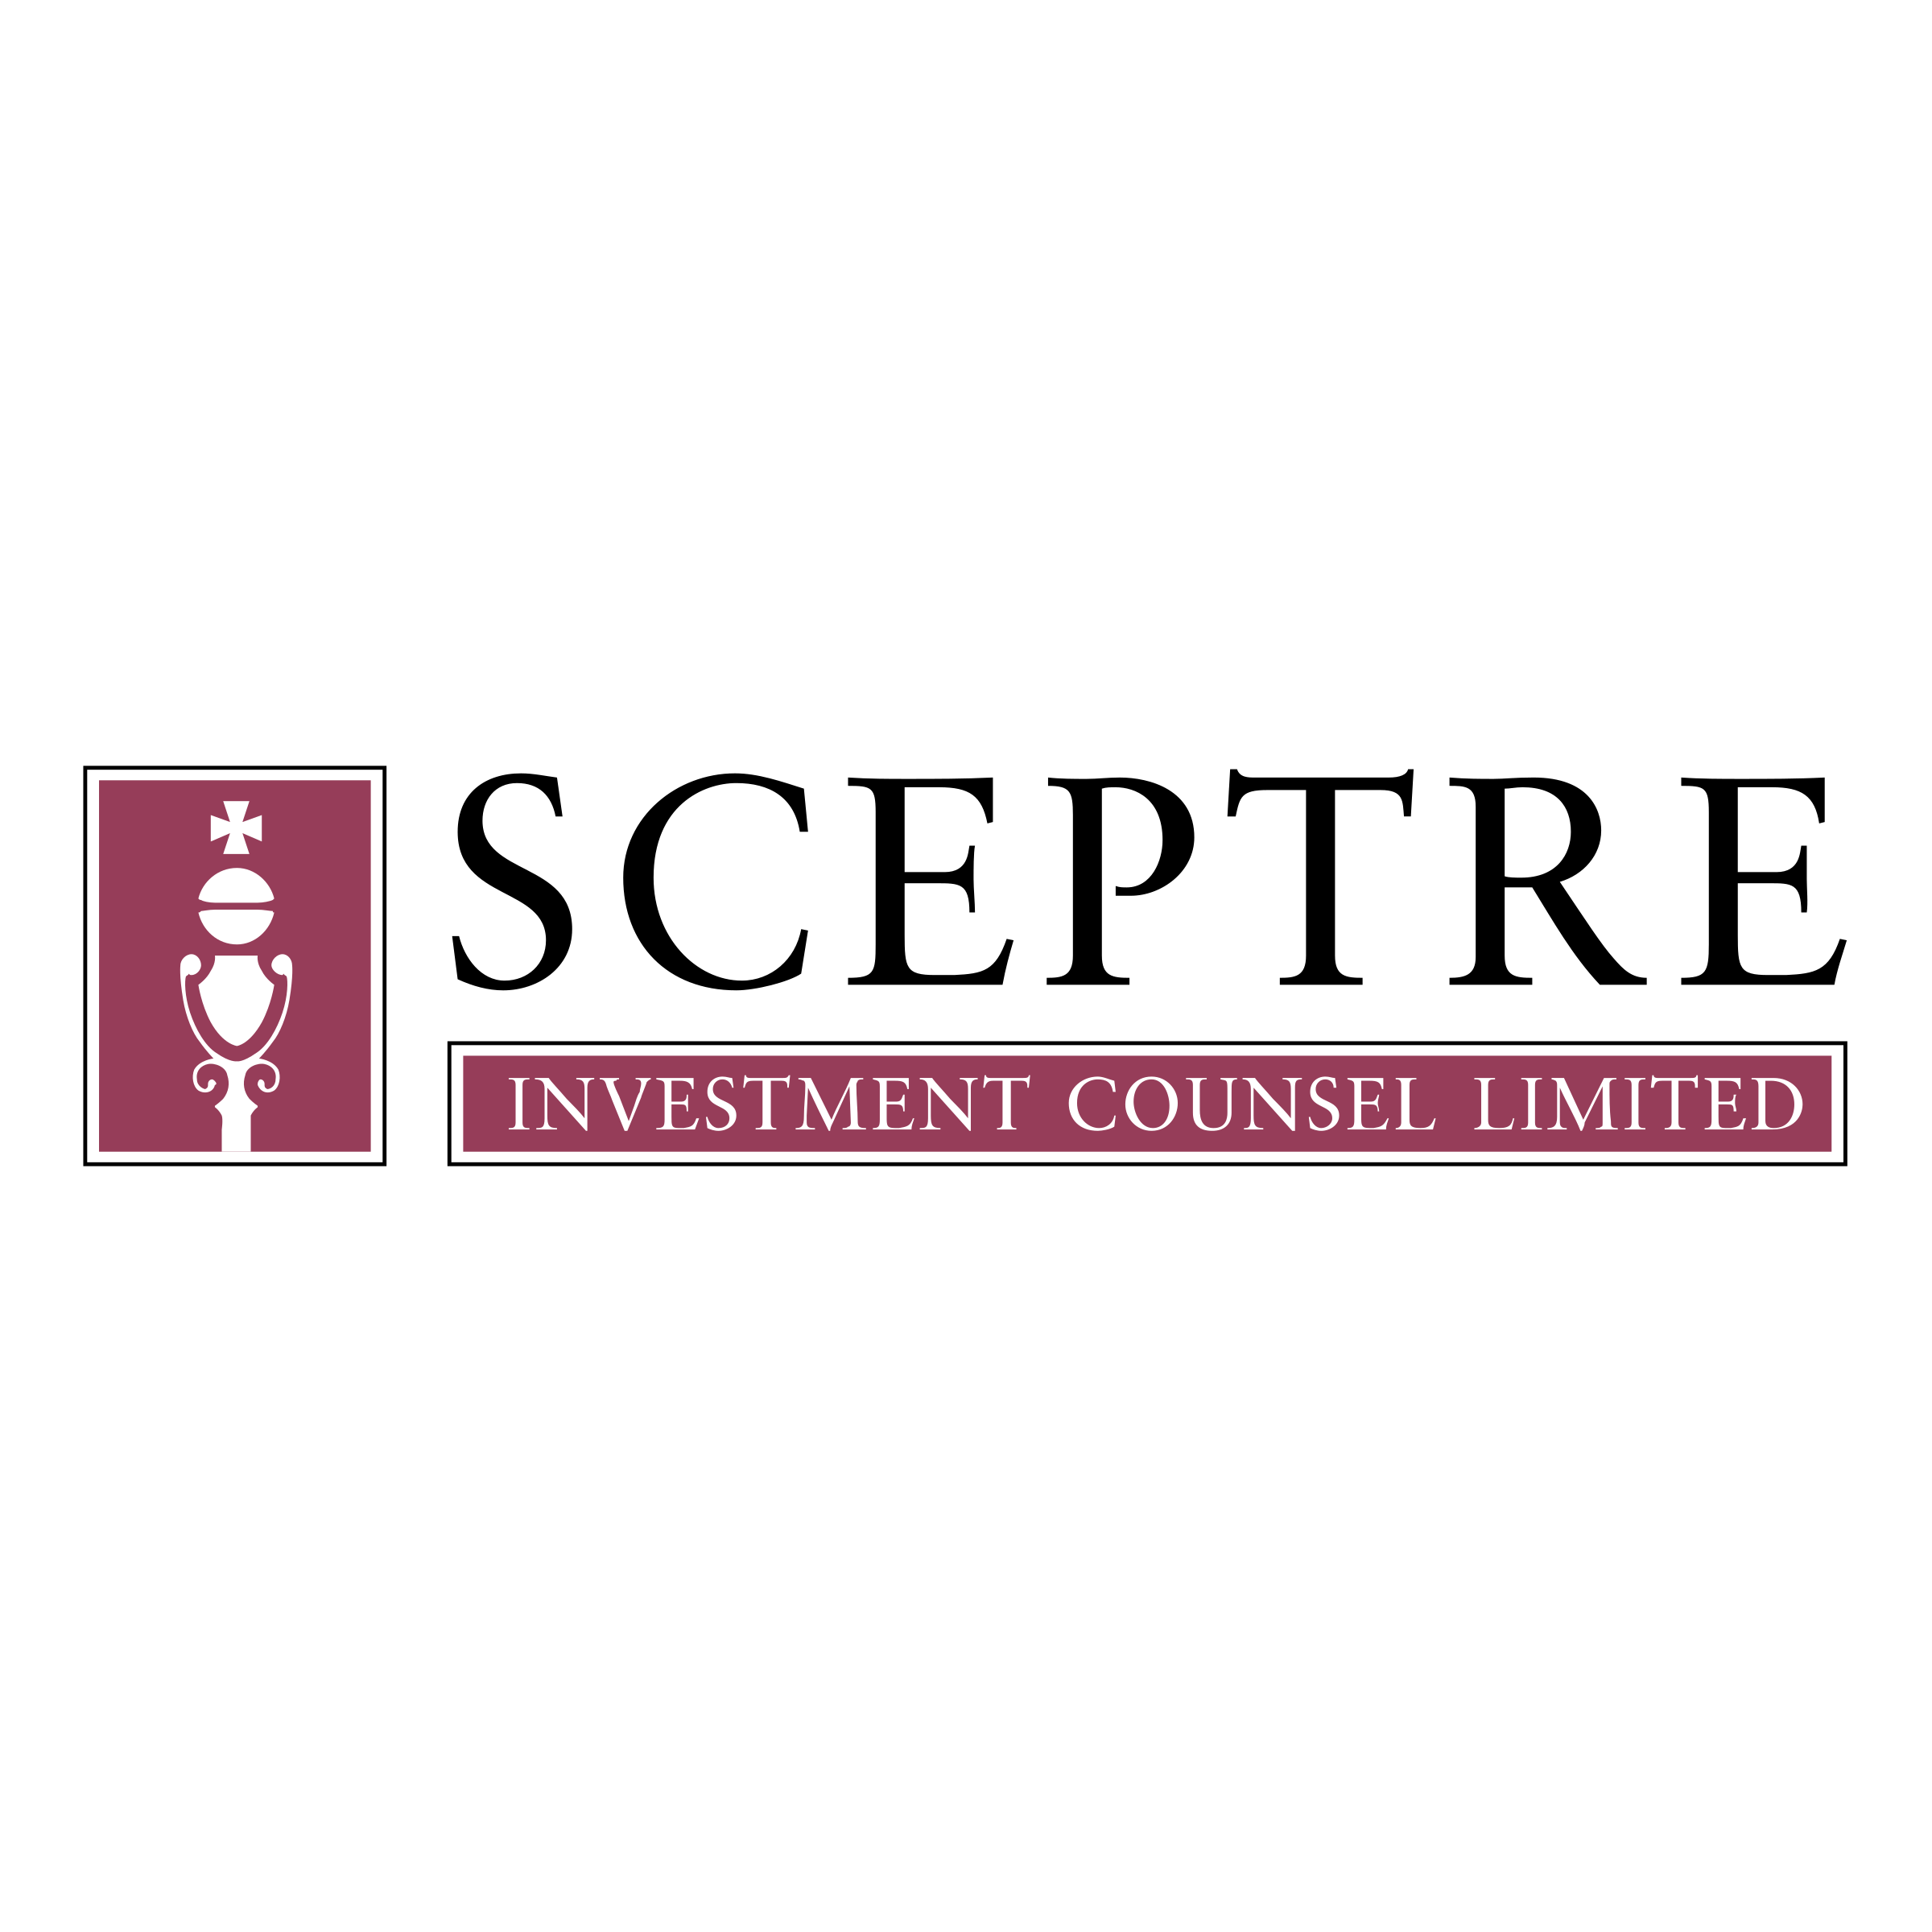 Sceptre Logo - Sceptre Logo PNG Transparent & SVG Vector